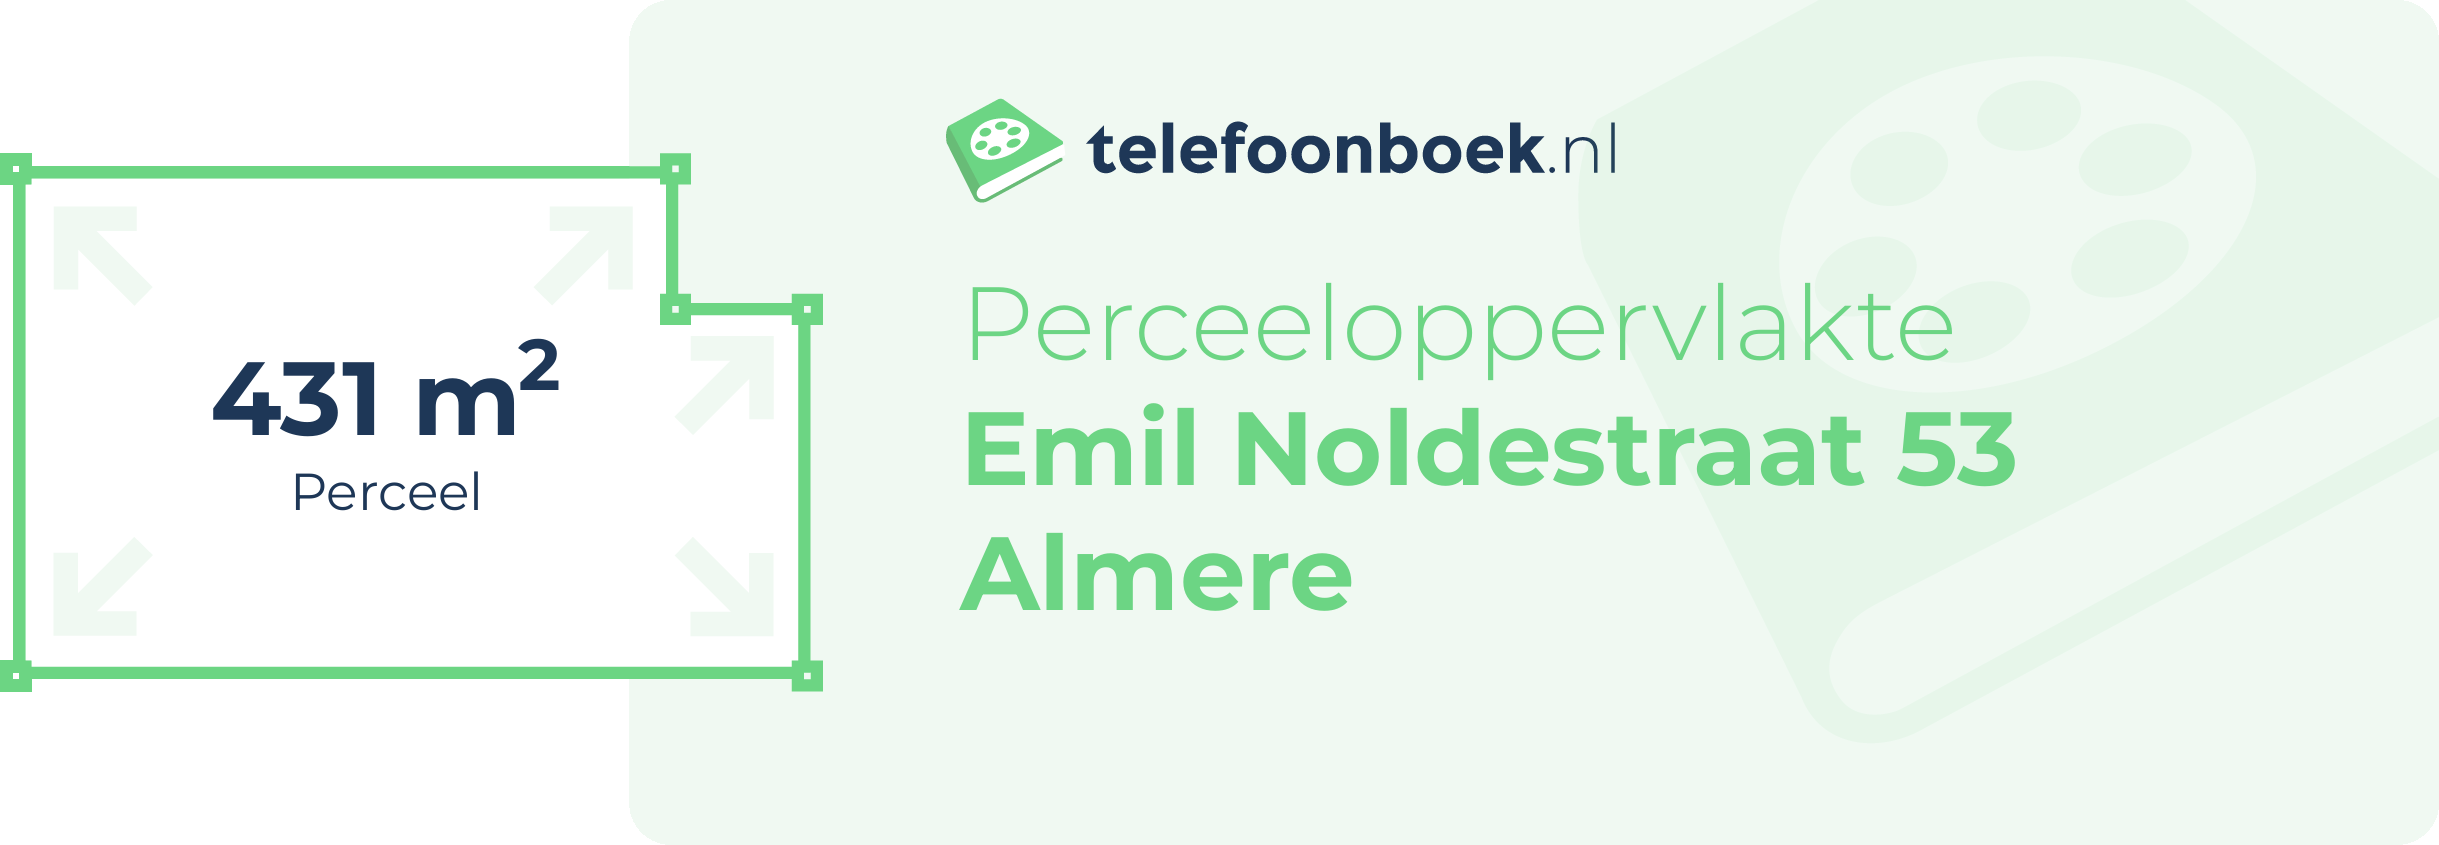 Perceeloppervlakte Emil Noldestraat 53 Almere